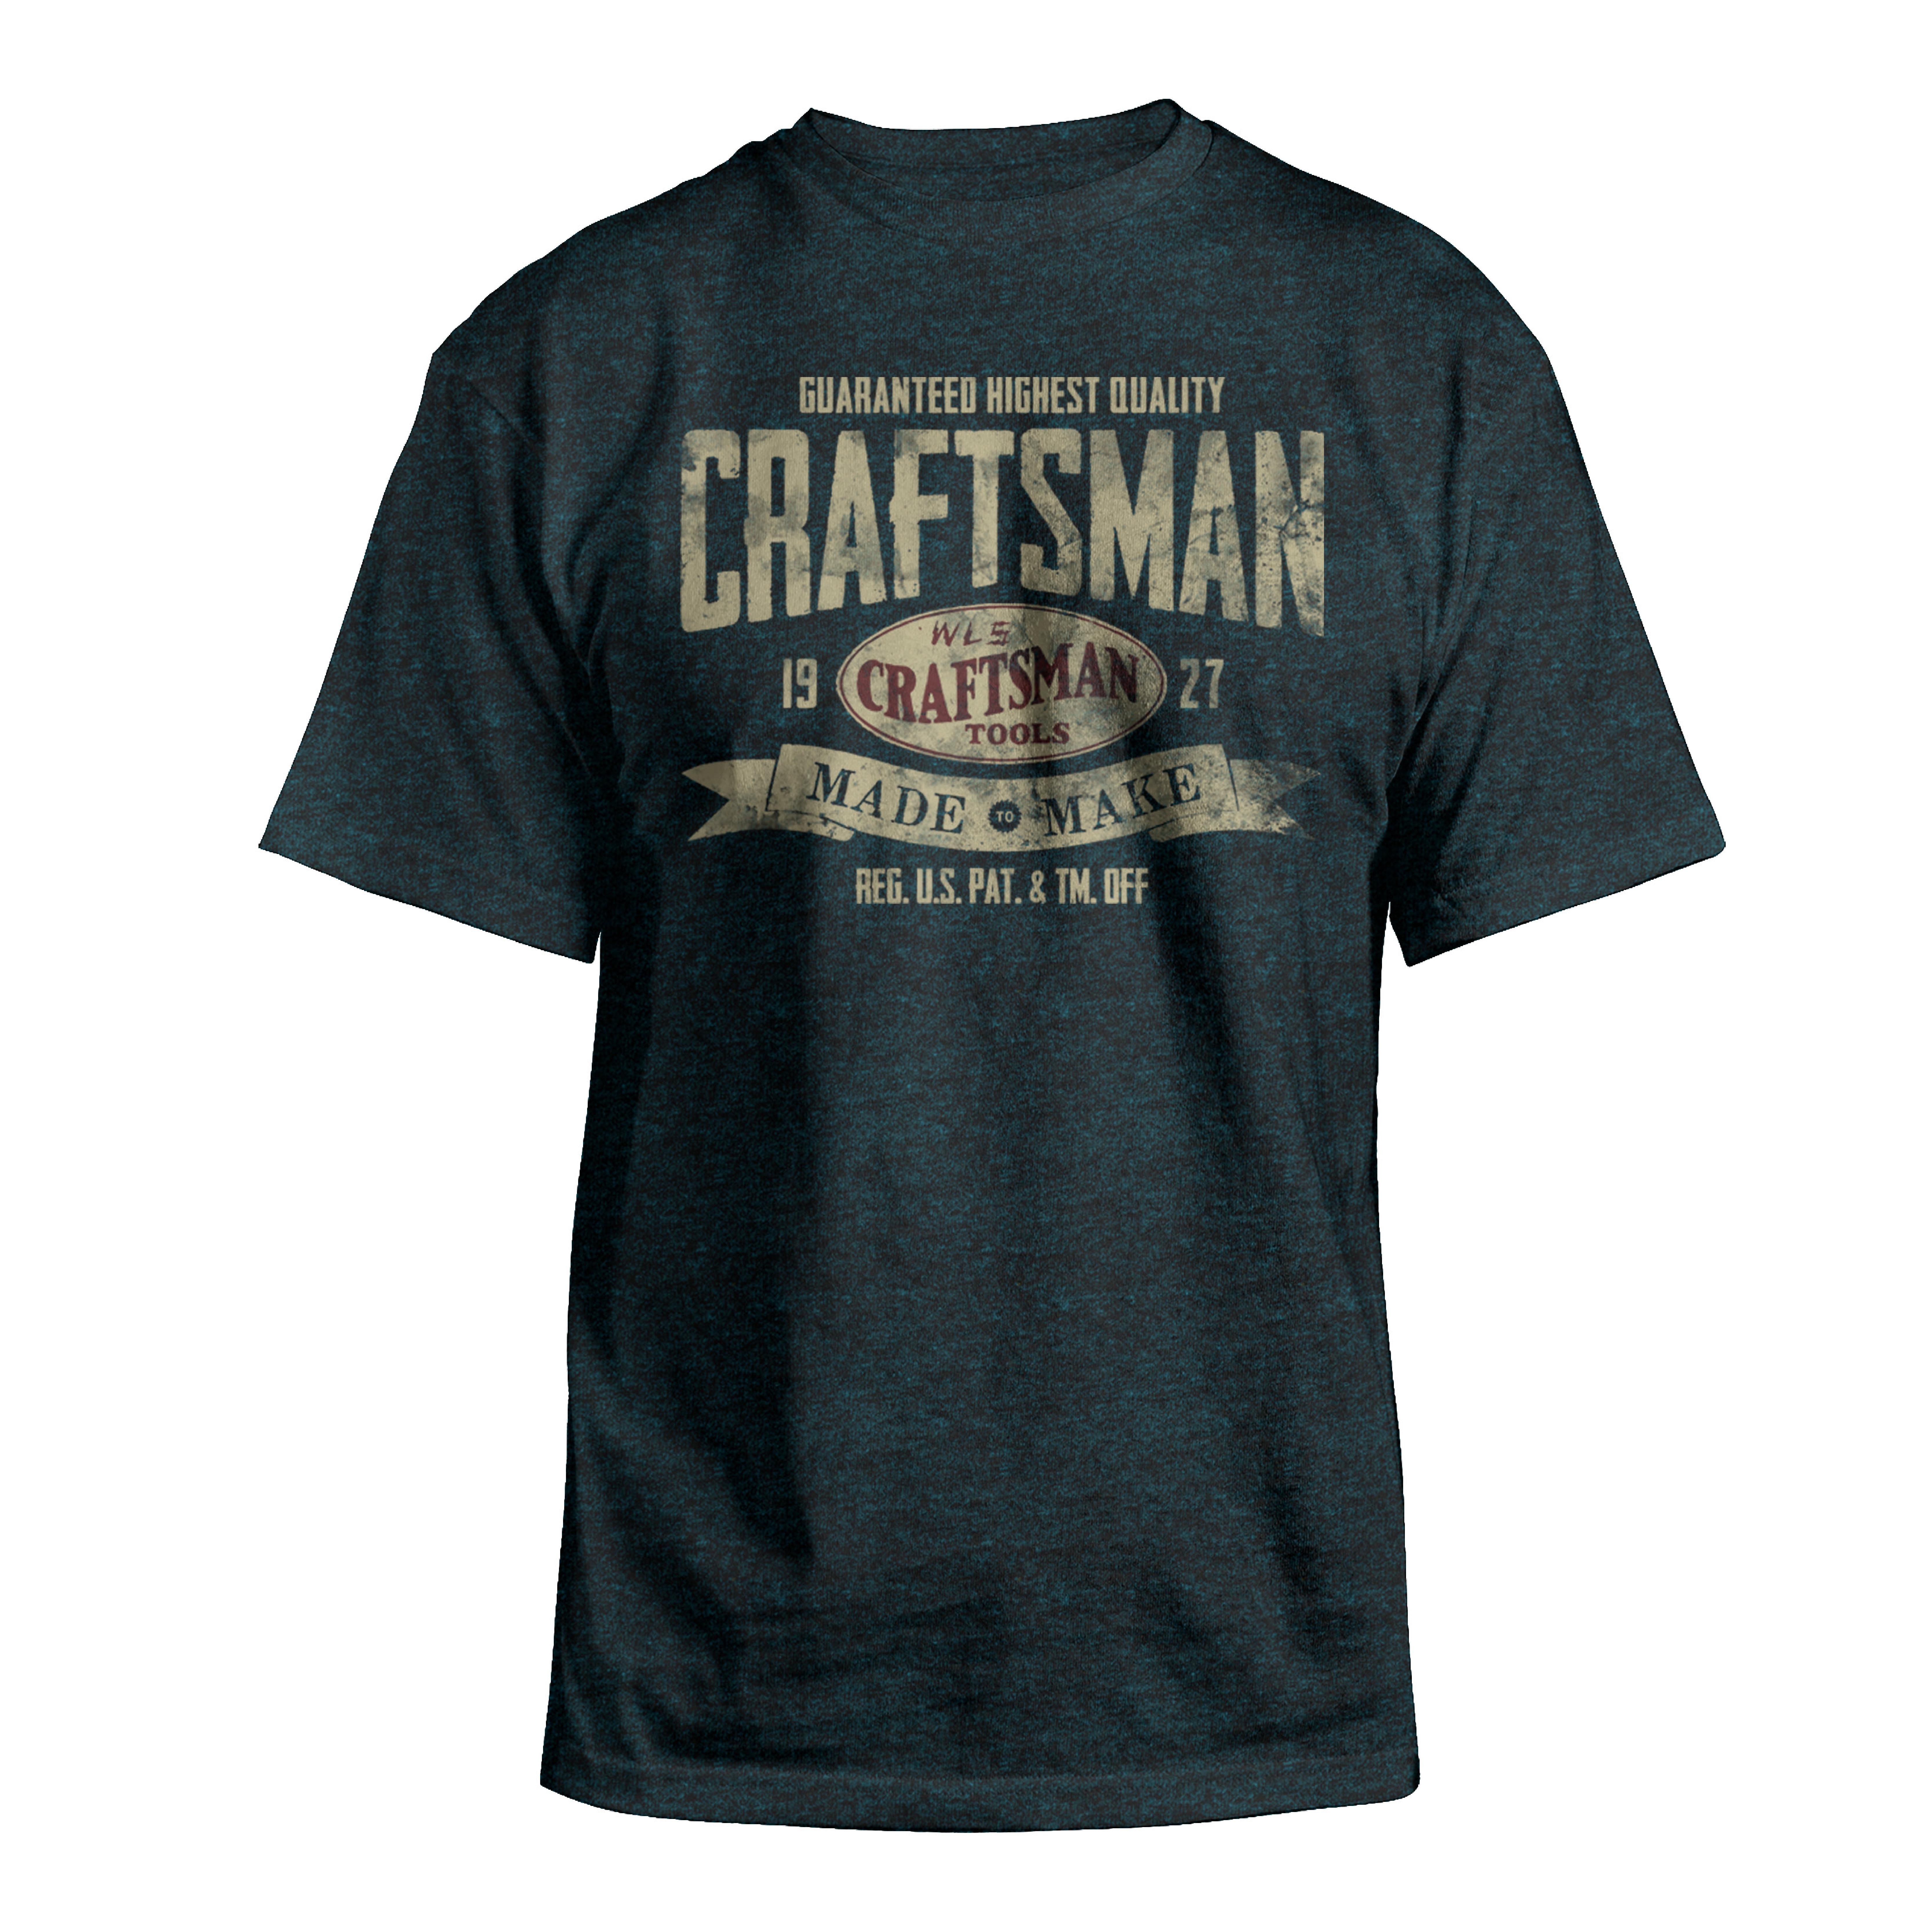 Craftsman Men's American Goods T-Shirt